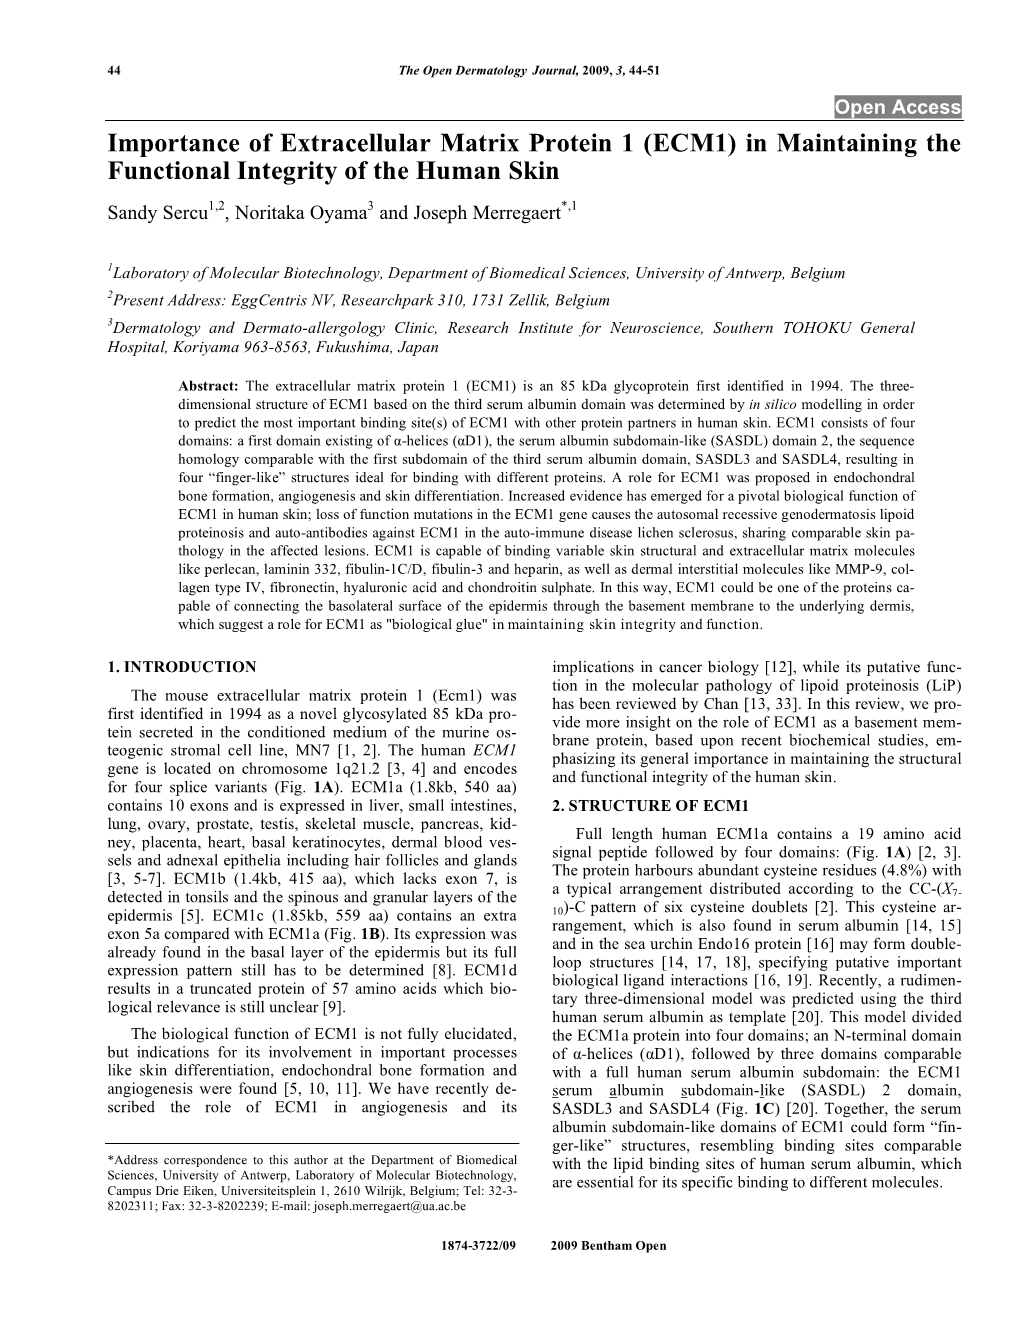 Importance of Extracellular Matrix Protein 1 (ECM1)